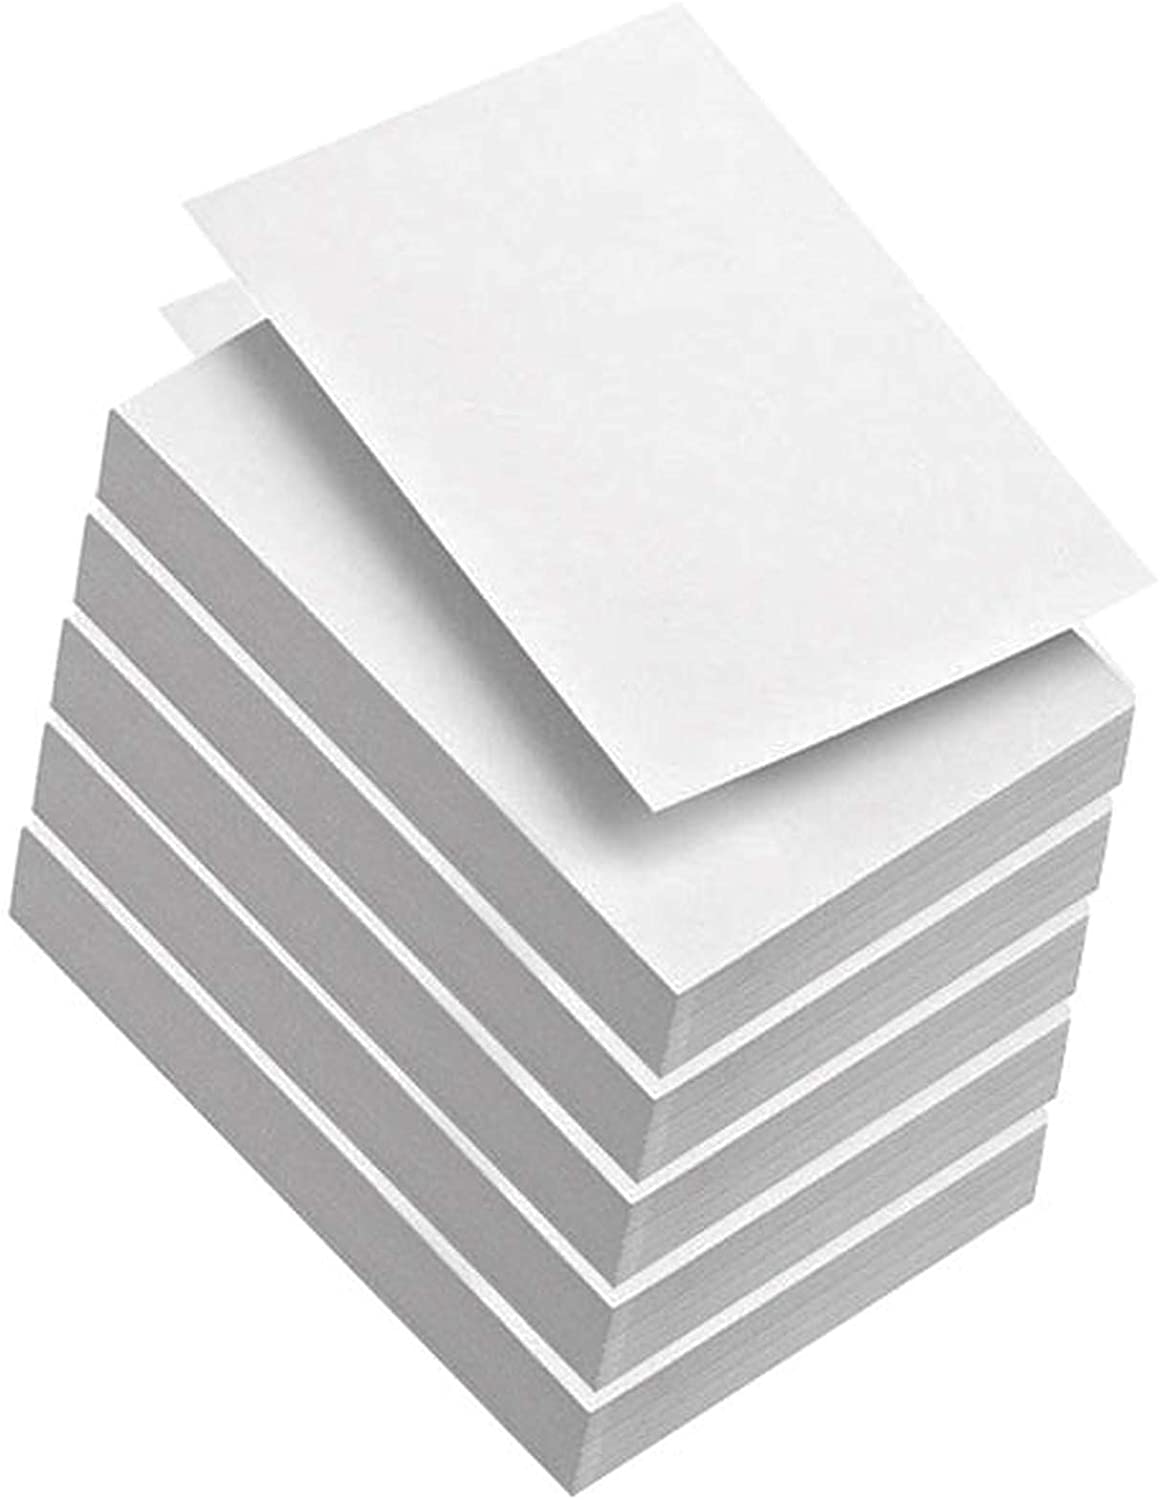 Palet de Folios A4 80gr Olef Copy 3,09€ paquete de 500 folios